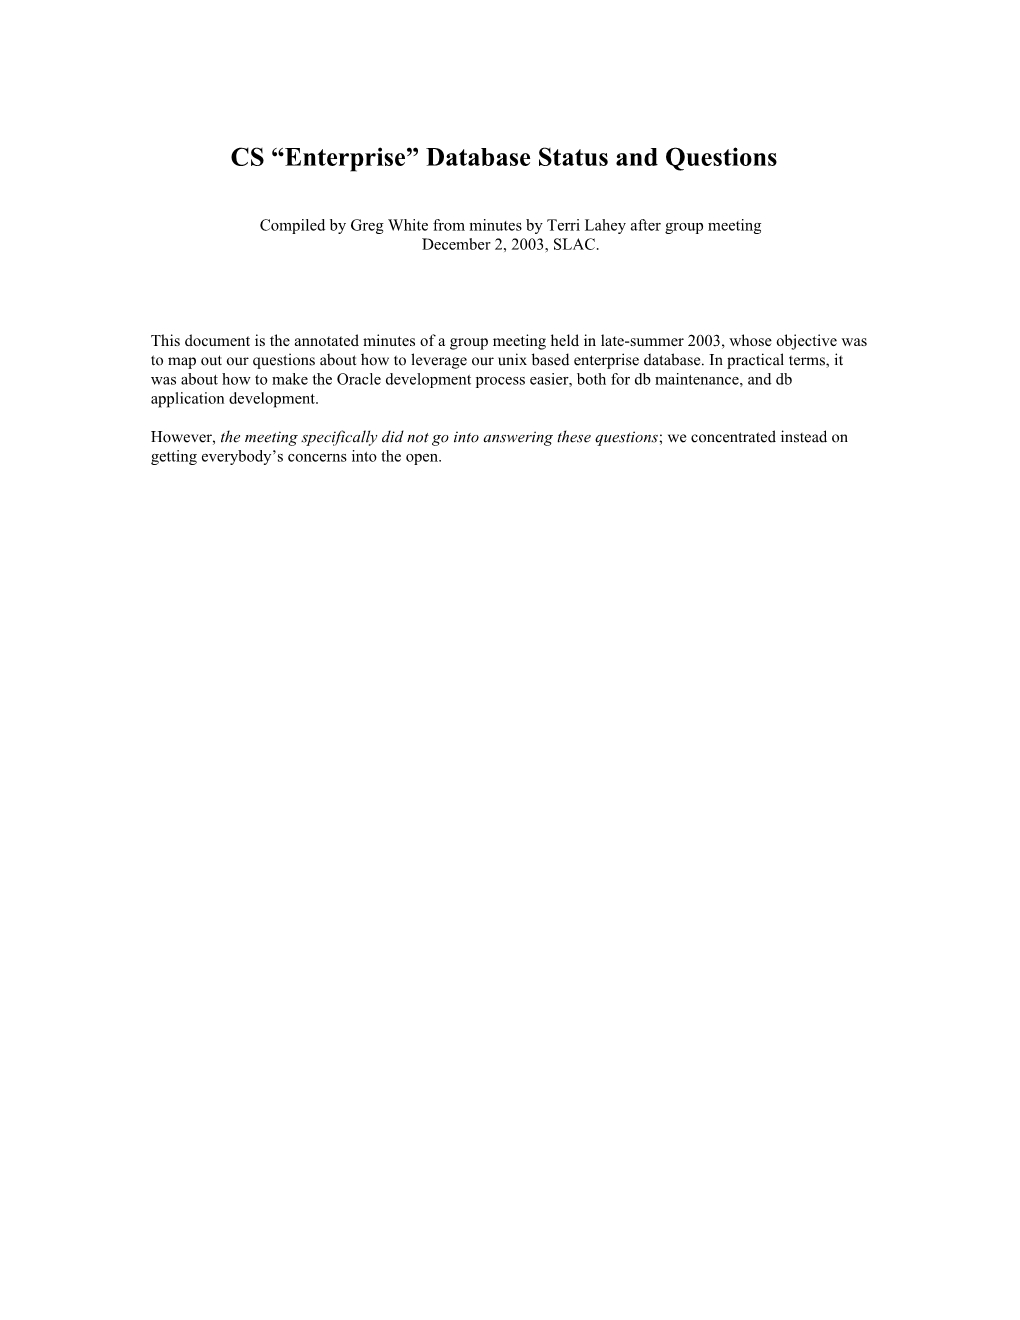 CS Enterprise Database Status and Questions